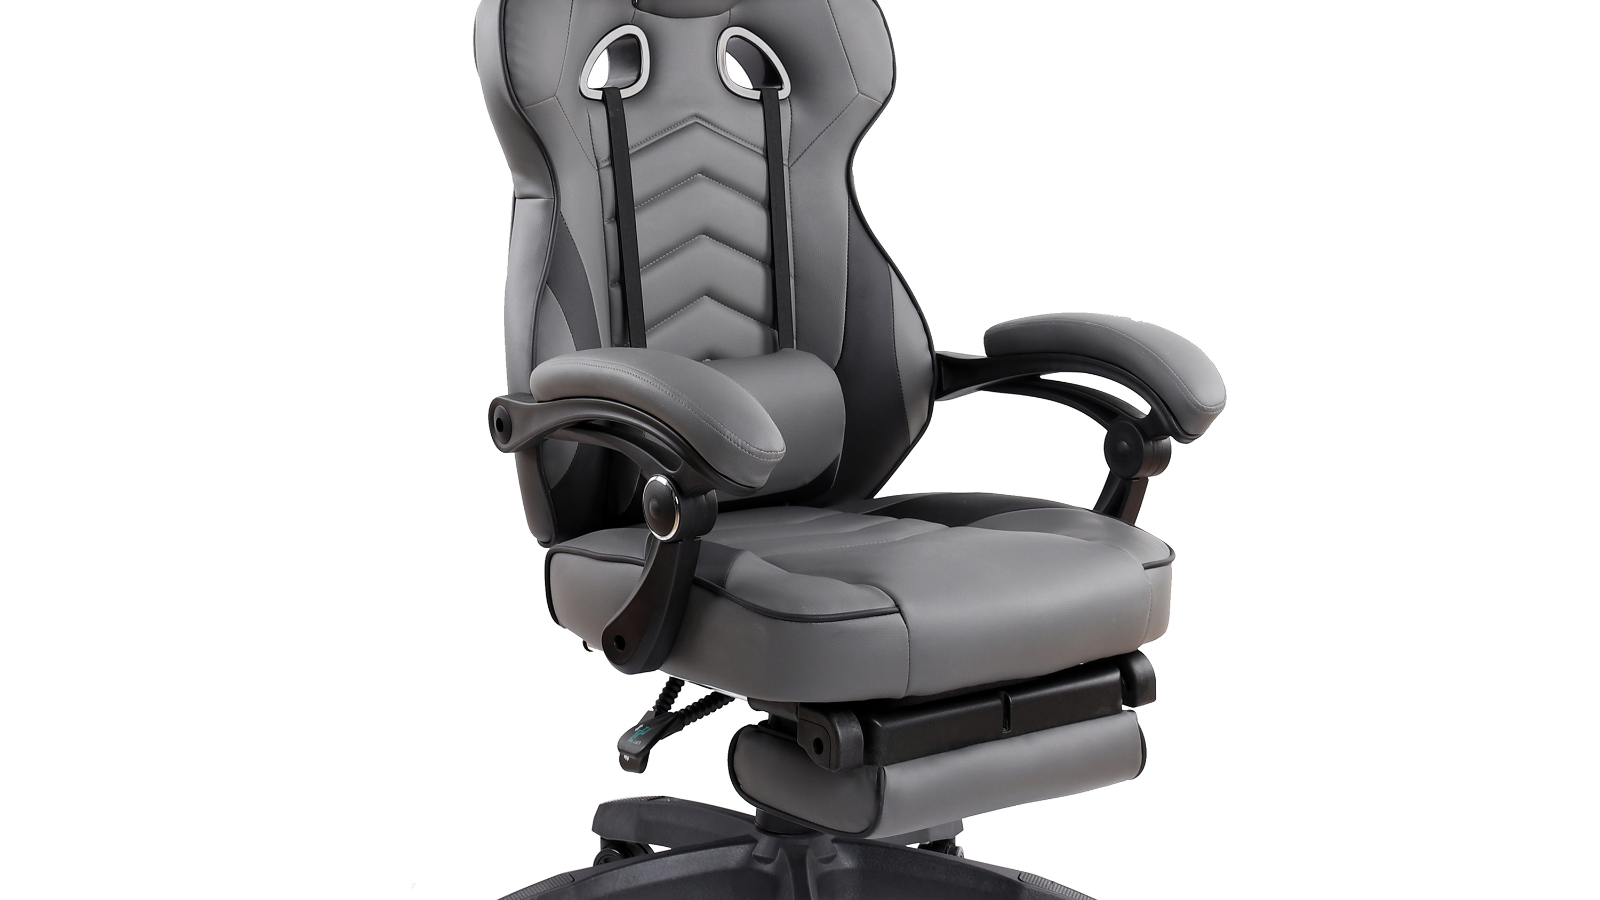 Techni Mobili Reclining Executive Gaming Chair w/ Footrest, Grey/Black